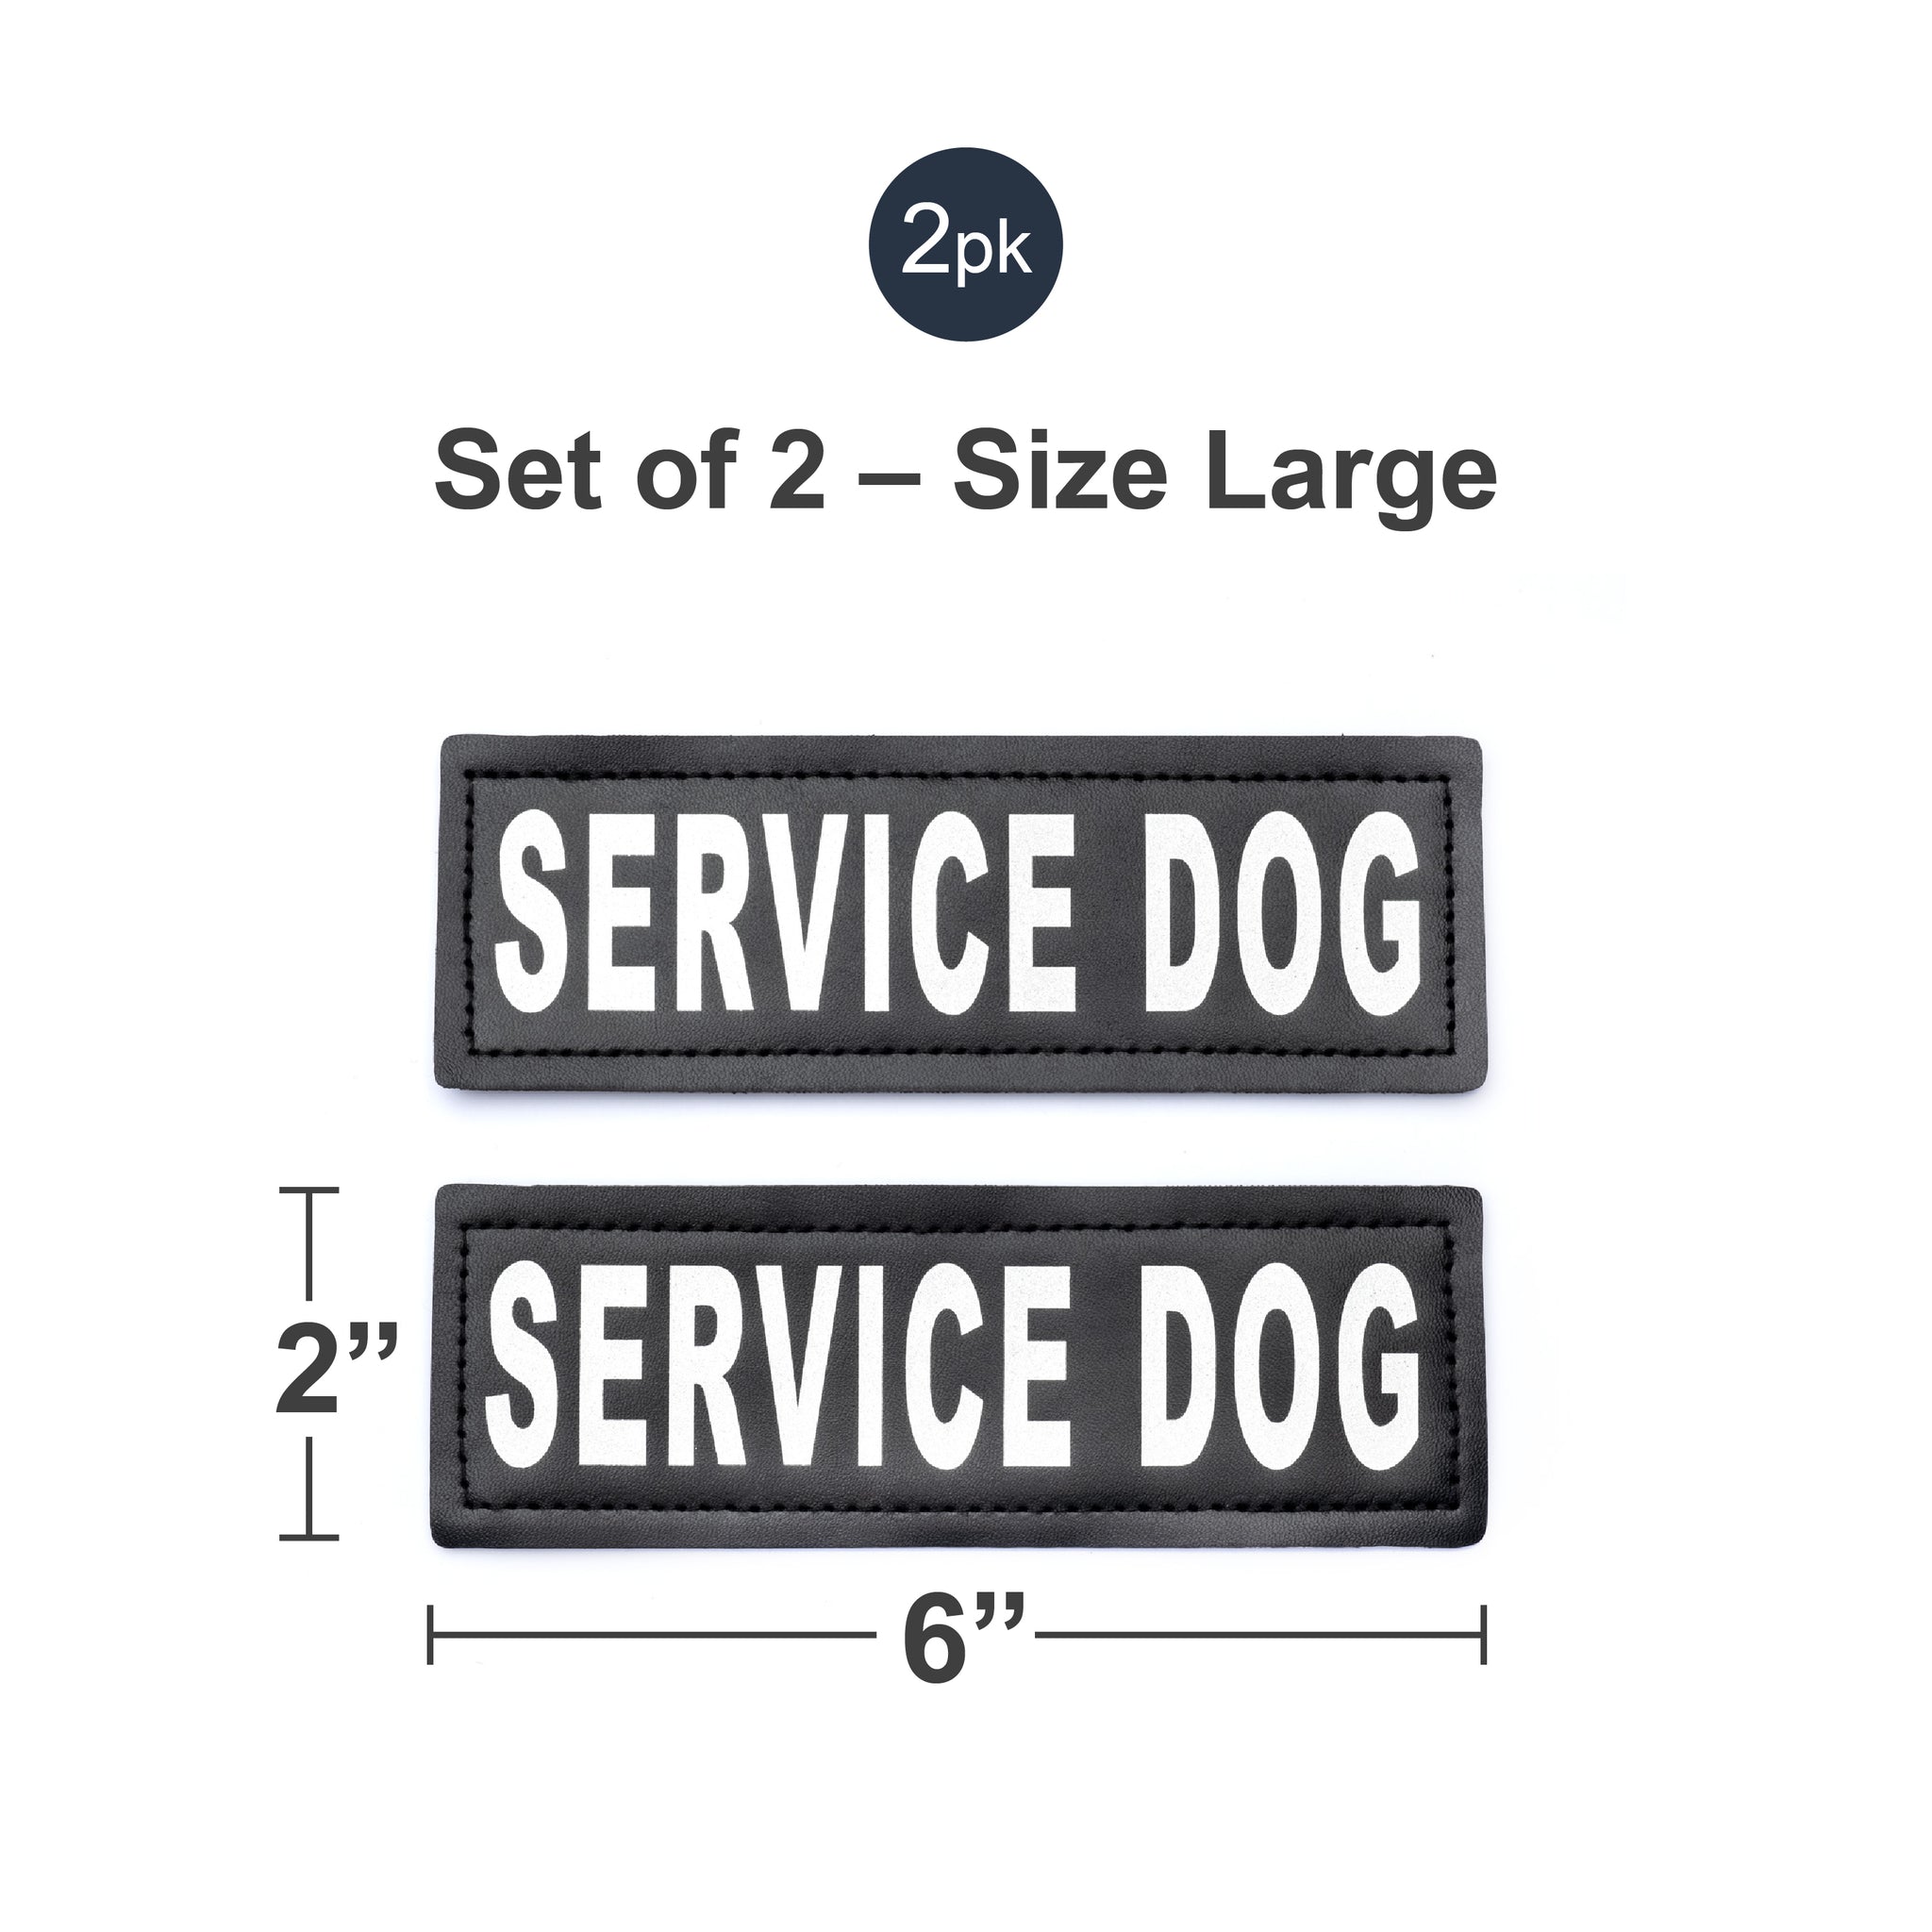  DoThisAllDay Service Dog Patch（11 pcs）,Removable Service Dog  Vest Patches with Velcro Dog Patches for Harness : Pet Supplies